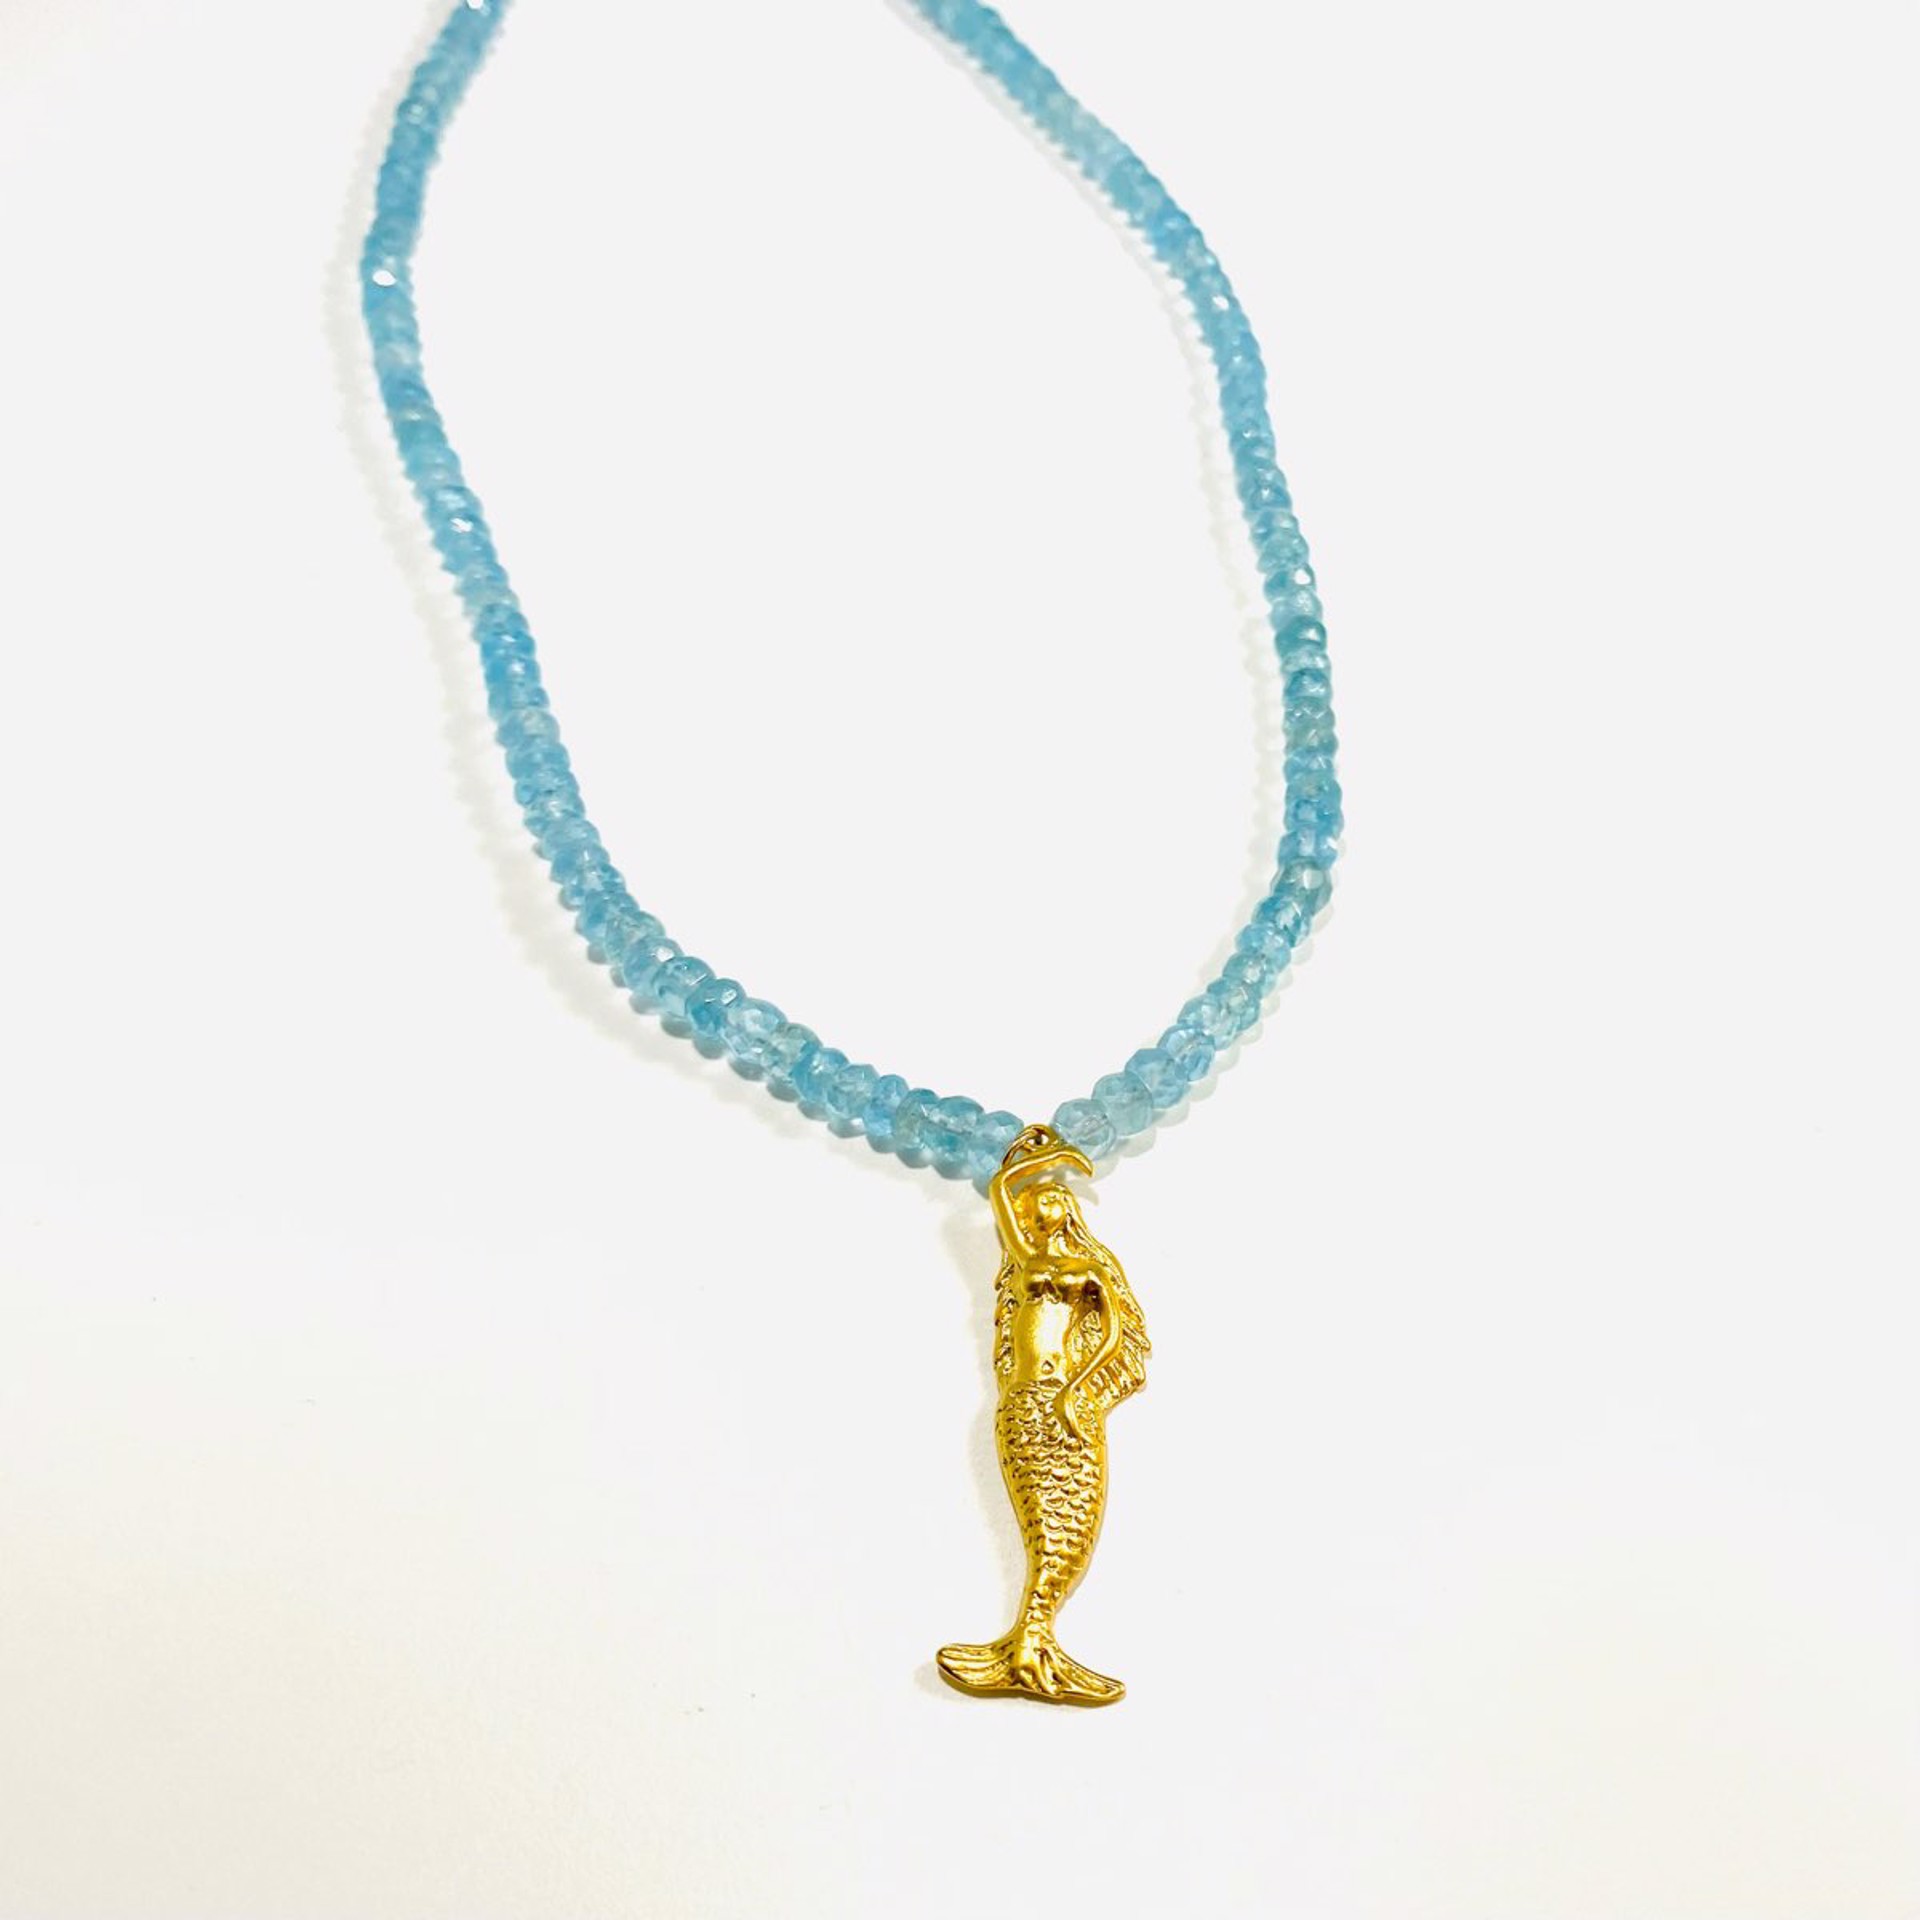 Faceted Apatite Vermeil Mermaid Pendant Necklace by Nance Trueworthy